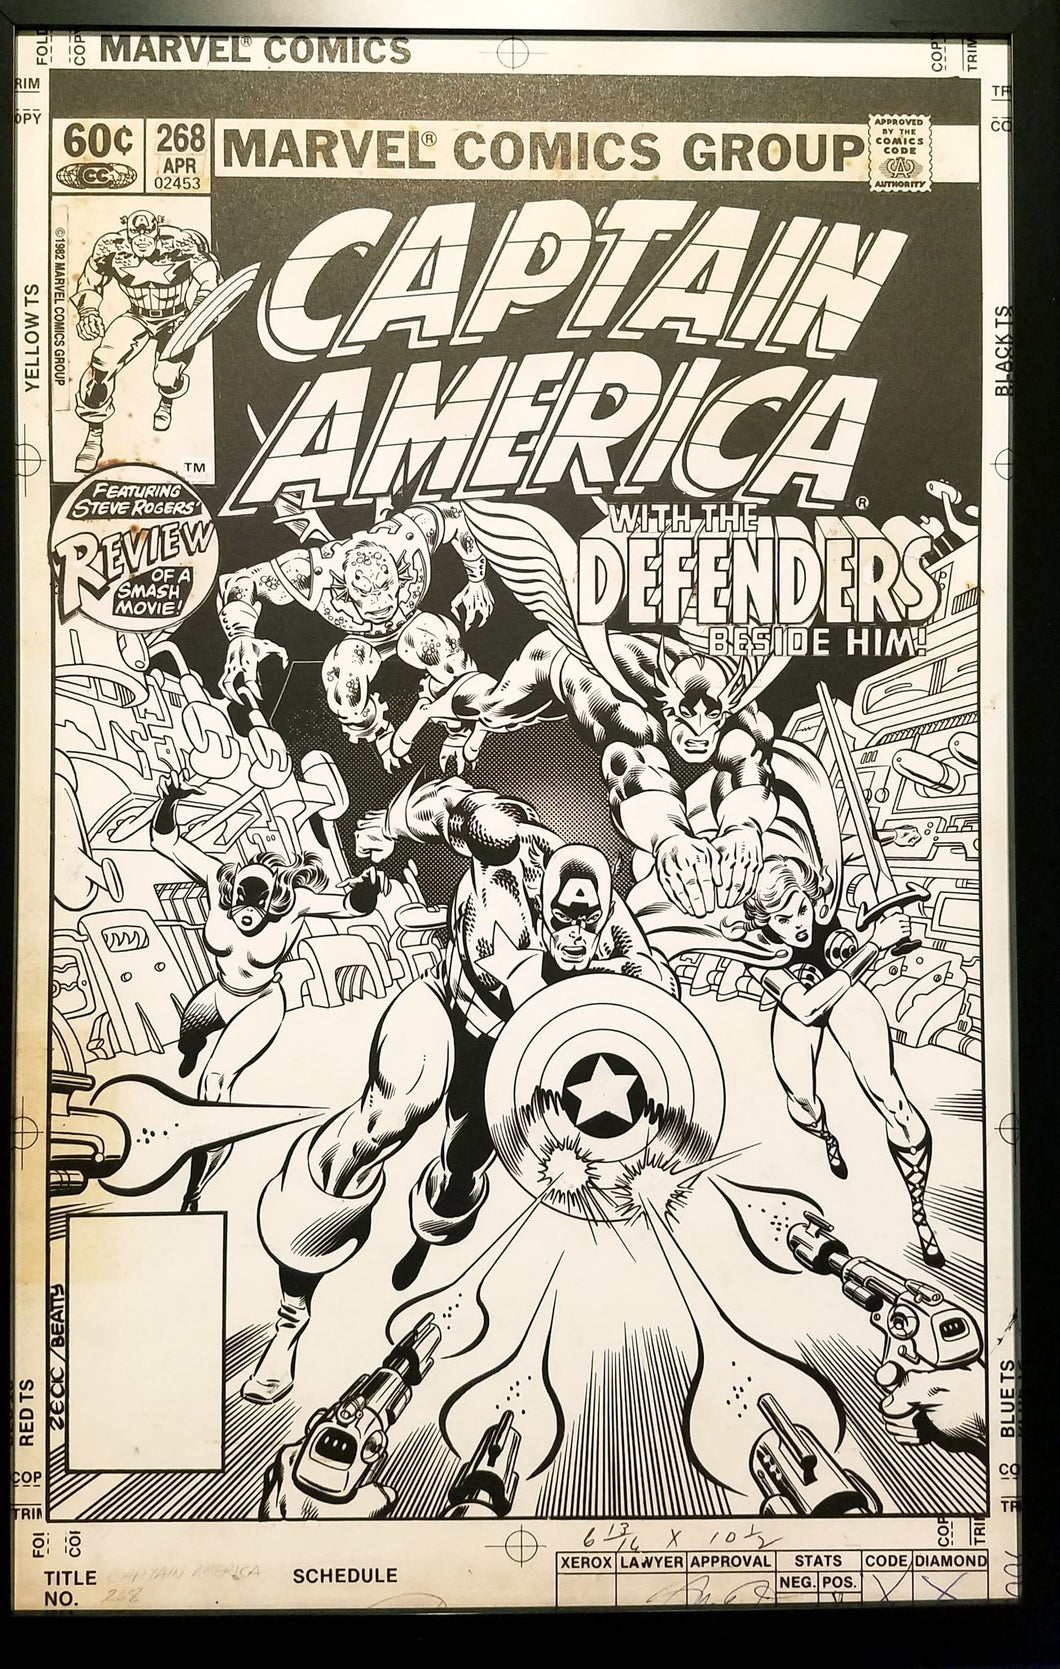 Captain America #268 by Mike Zeck 11x17 FRAMED Original Art Marvel Poster